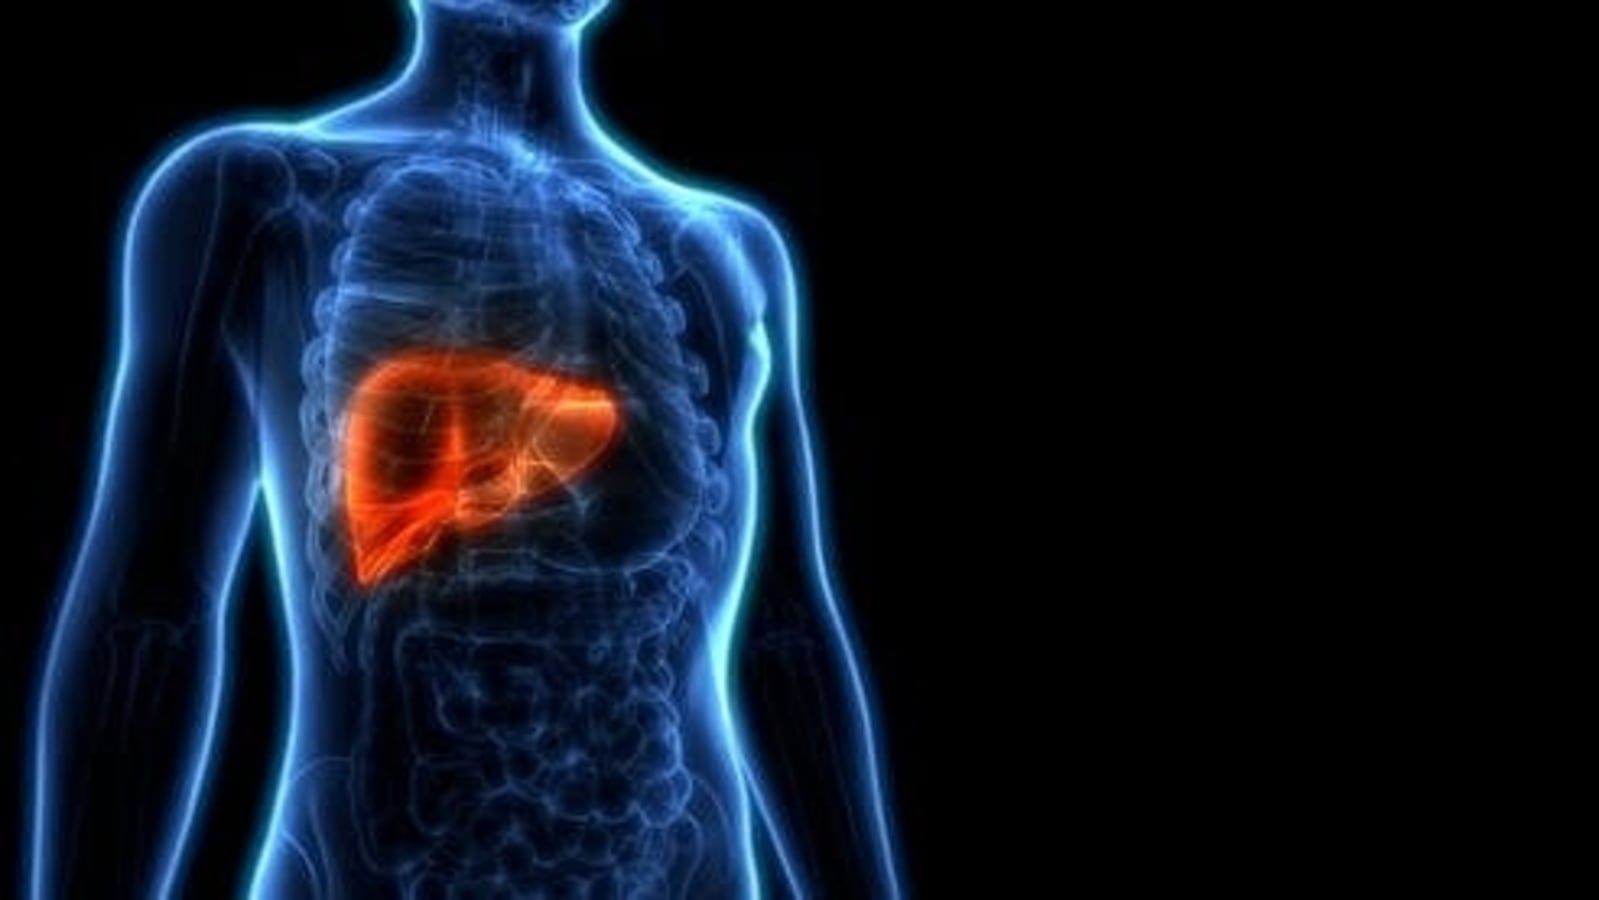 Study examines how chronic liver injury causes bone loss